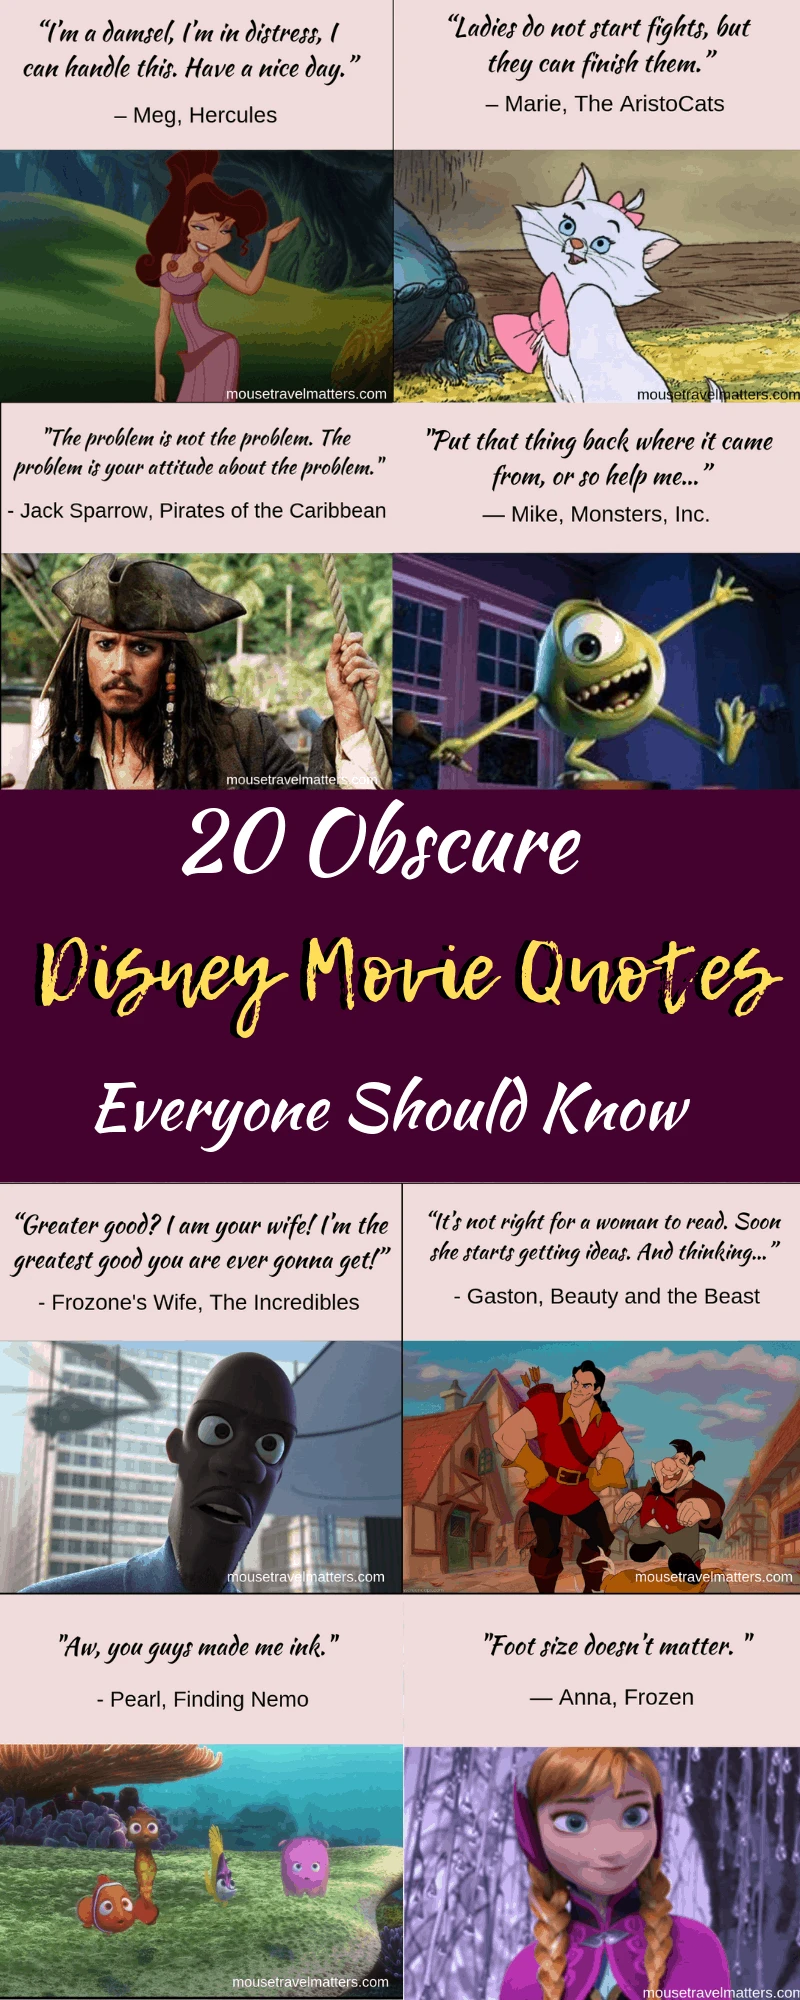 Disney Movie Quotes 